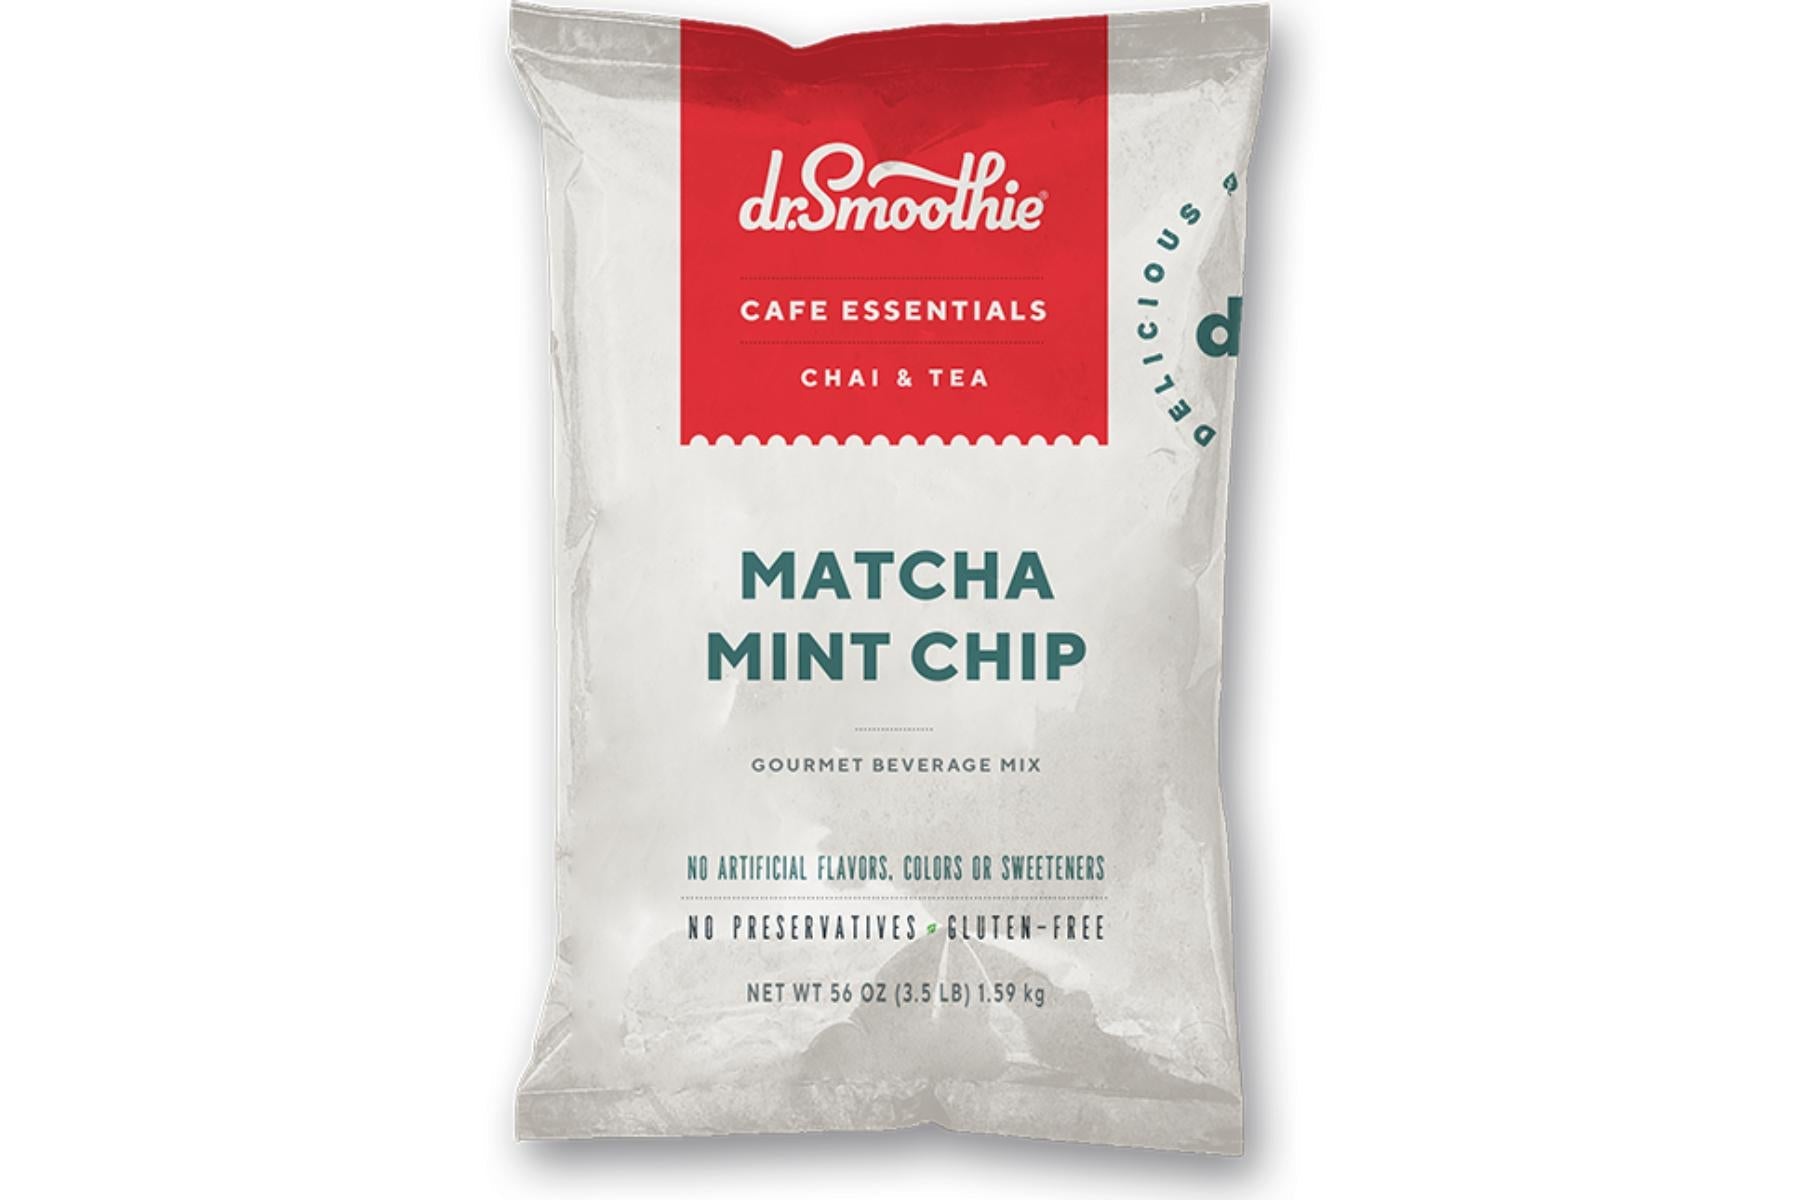 Dr. Smoothie Cafe Essentials Chai & Tea - 3.5lb Bulk Bag: Matcha Mint Chip